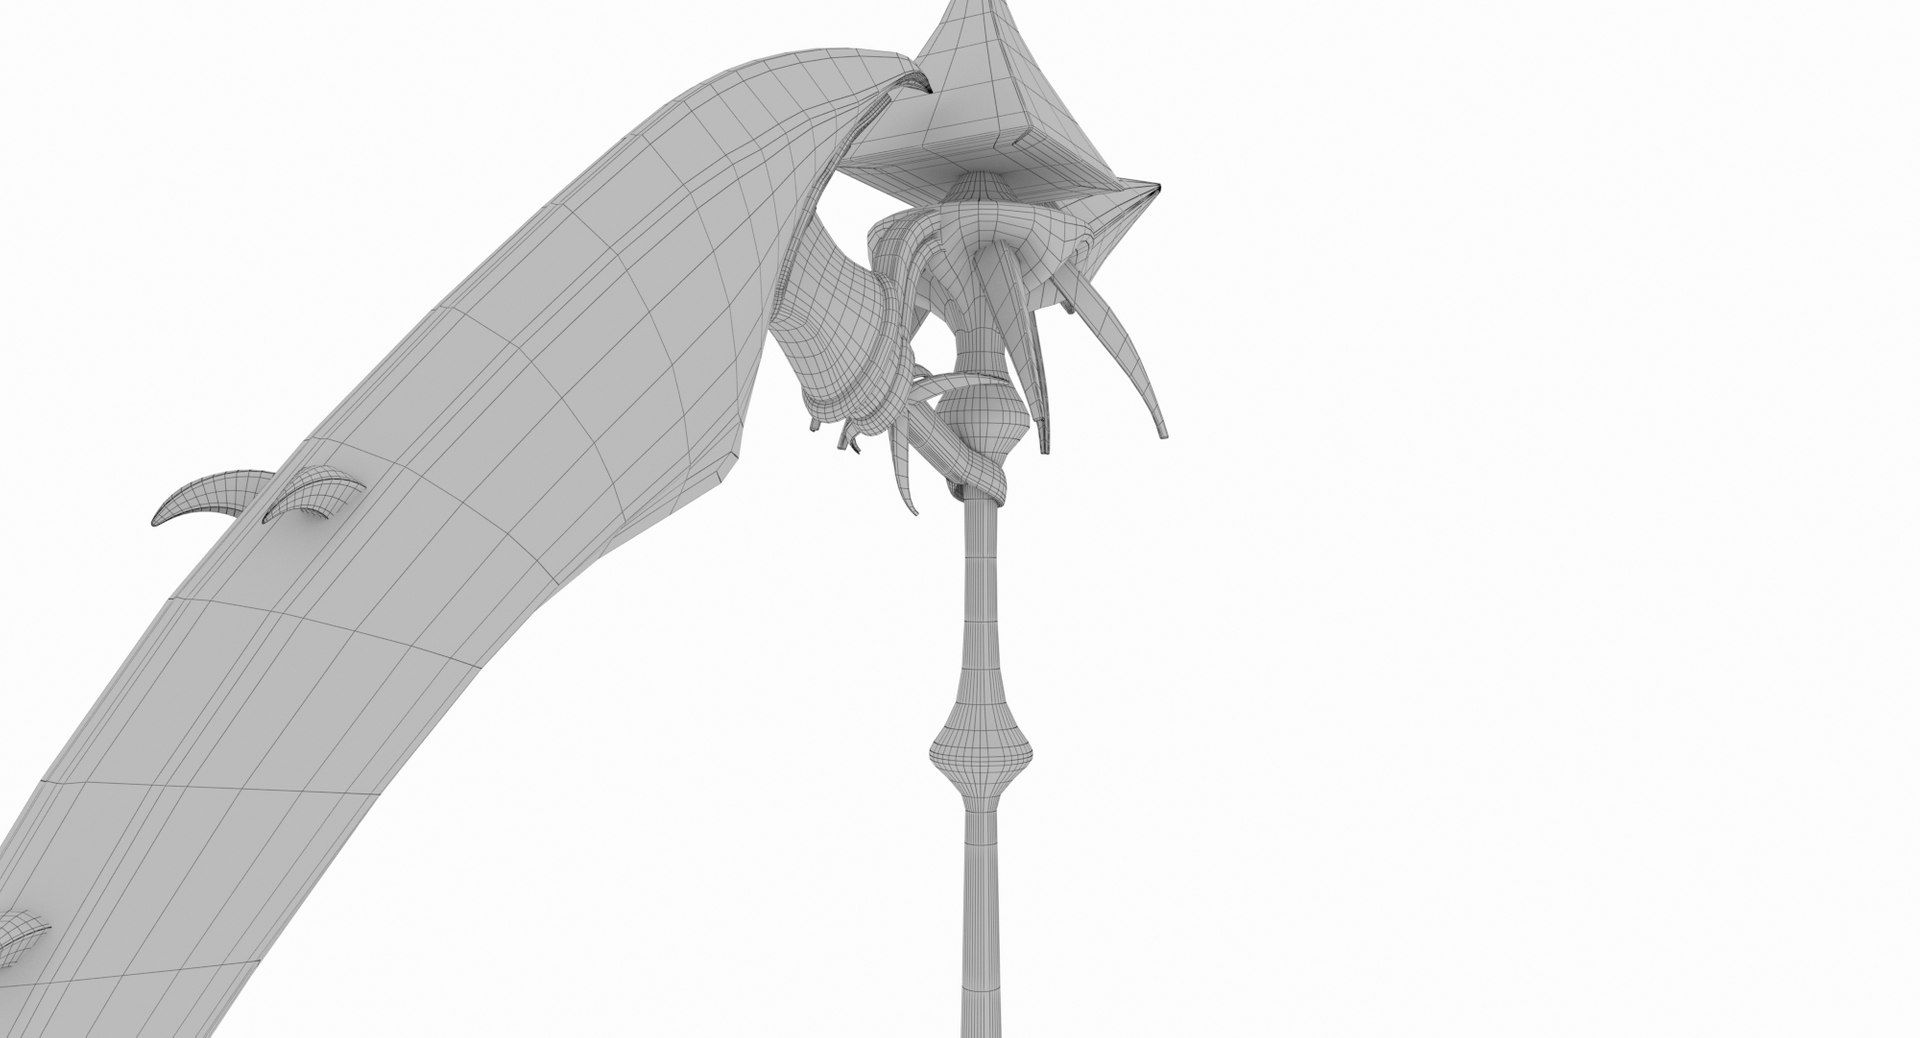 Grim reaper 3D model - TurboSquid 1858027